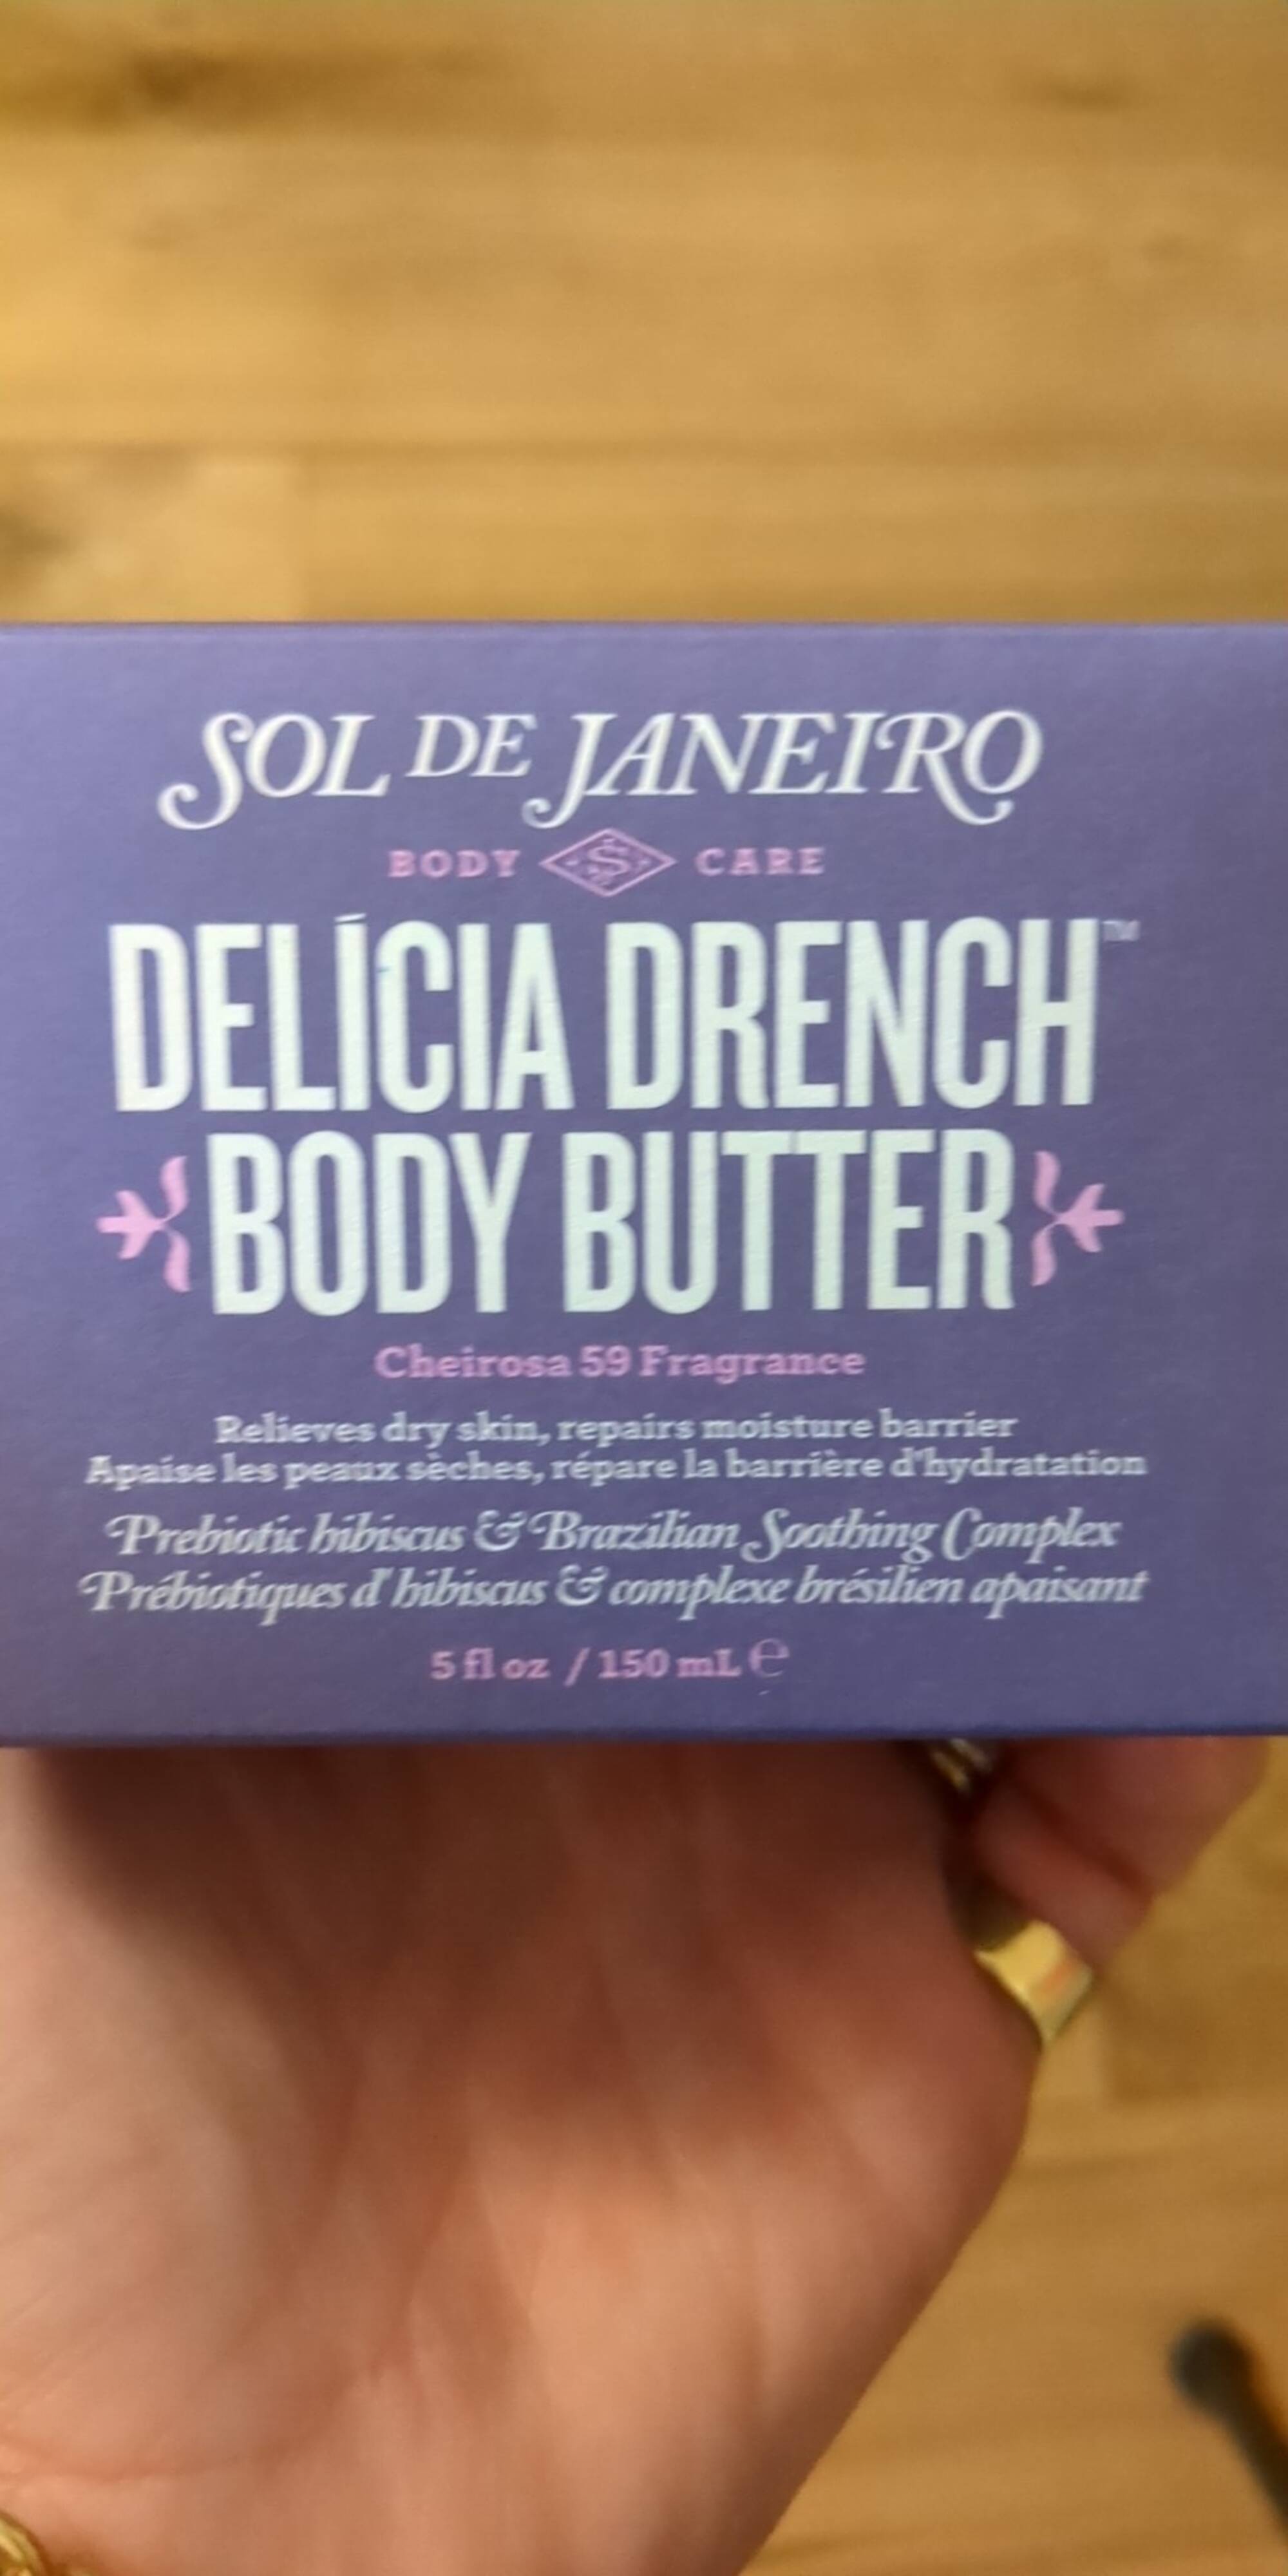 SOL DE JANEIRO - Delicia drench - Body butter